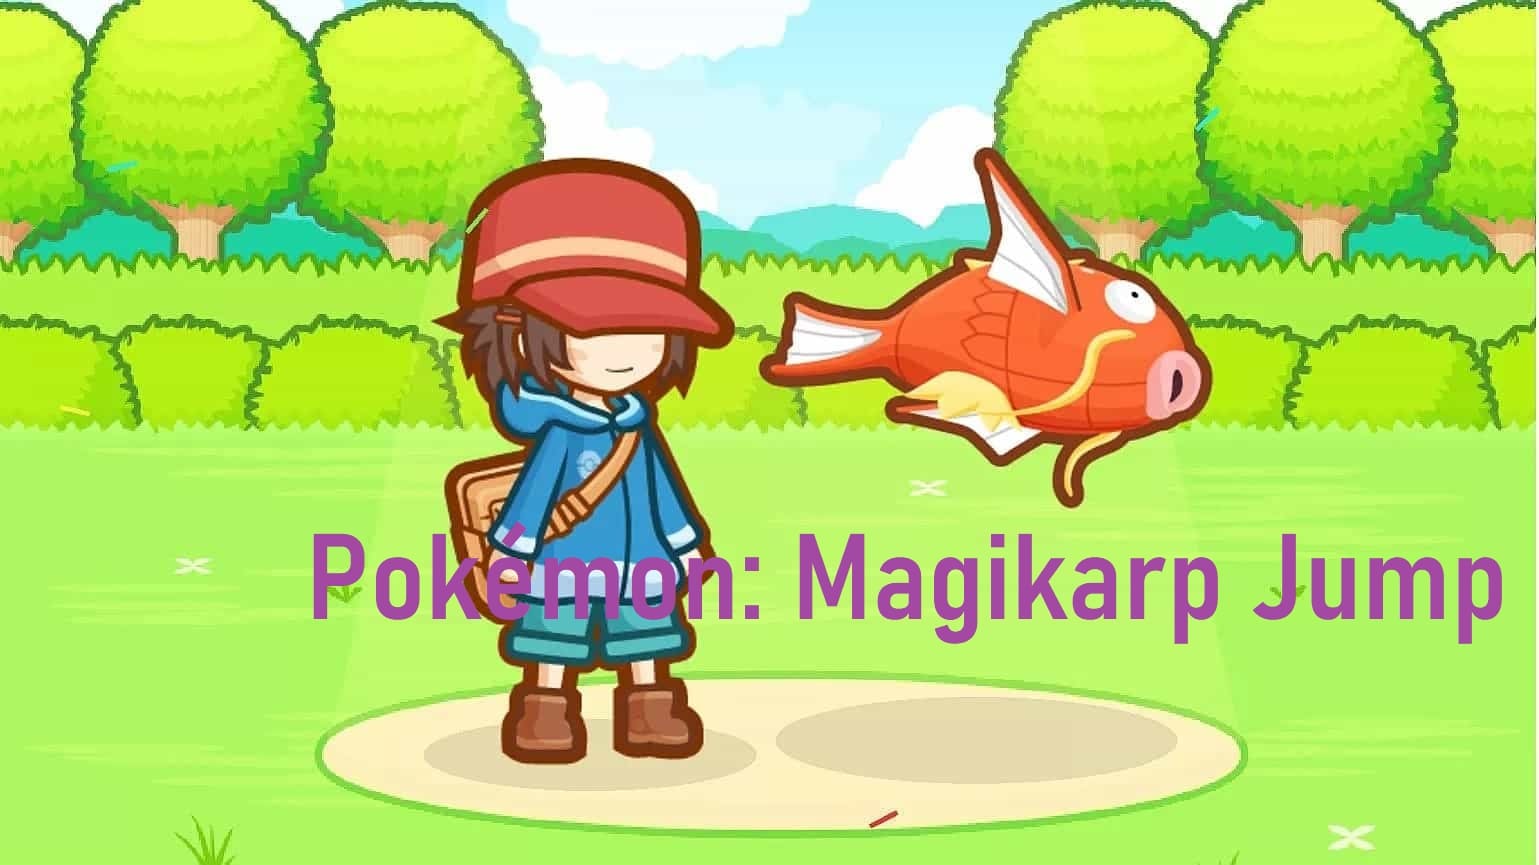 Pokémon: Magikarp Jump 1.3.11 APK MOD [Lượng Tiền Rất Lớn, Đá Qúy]